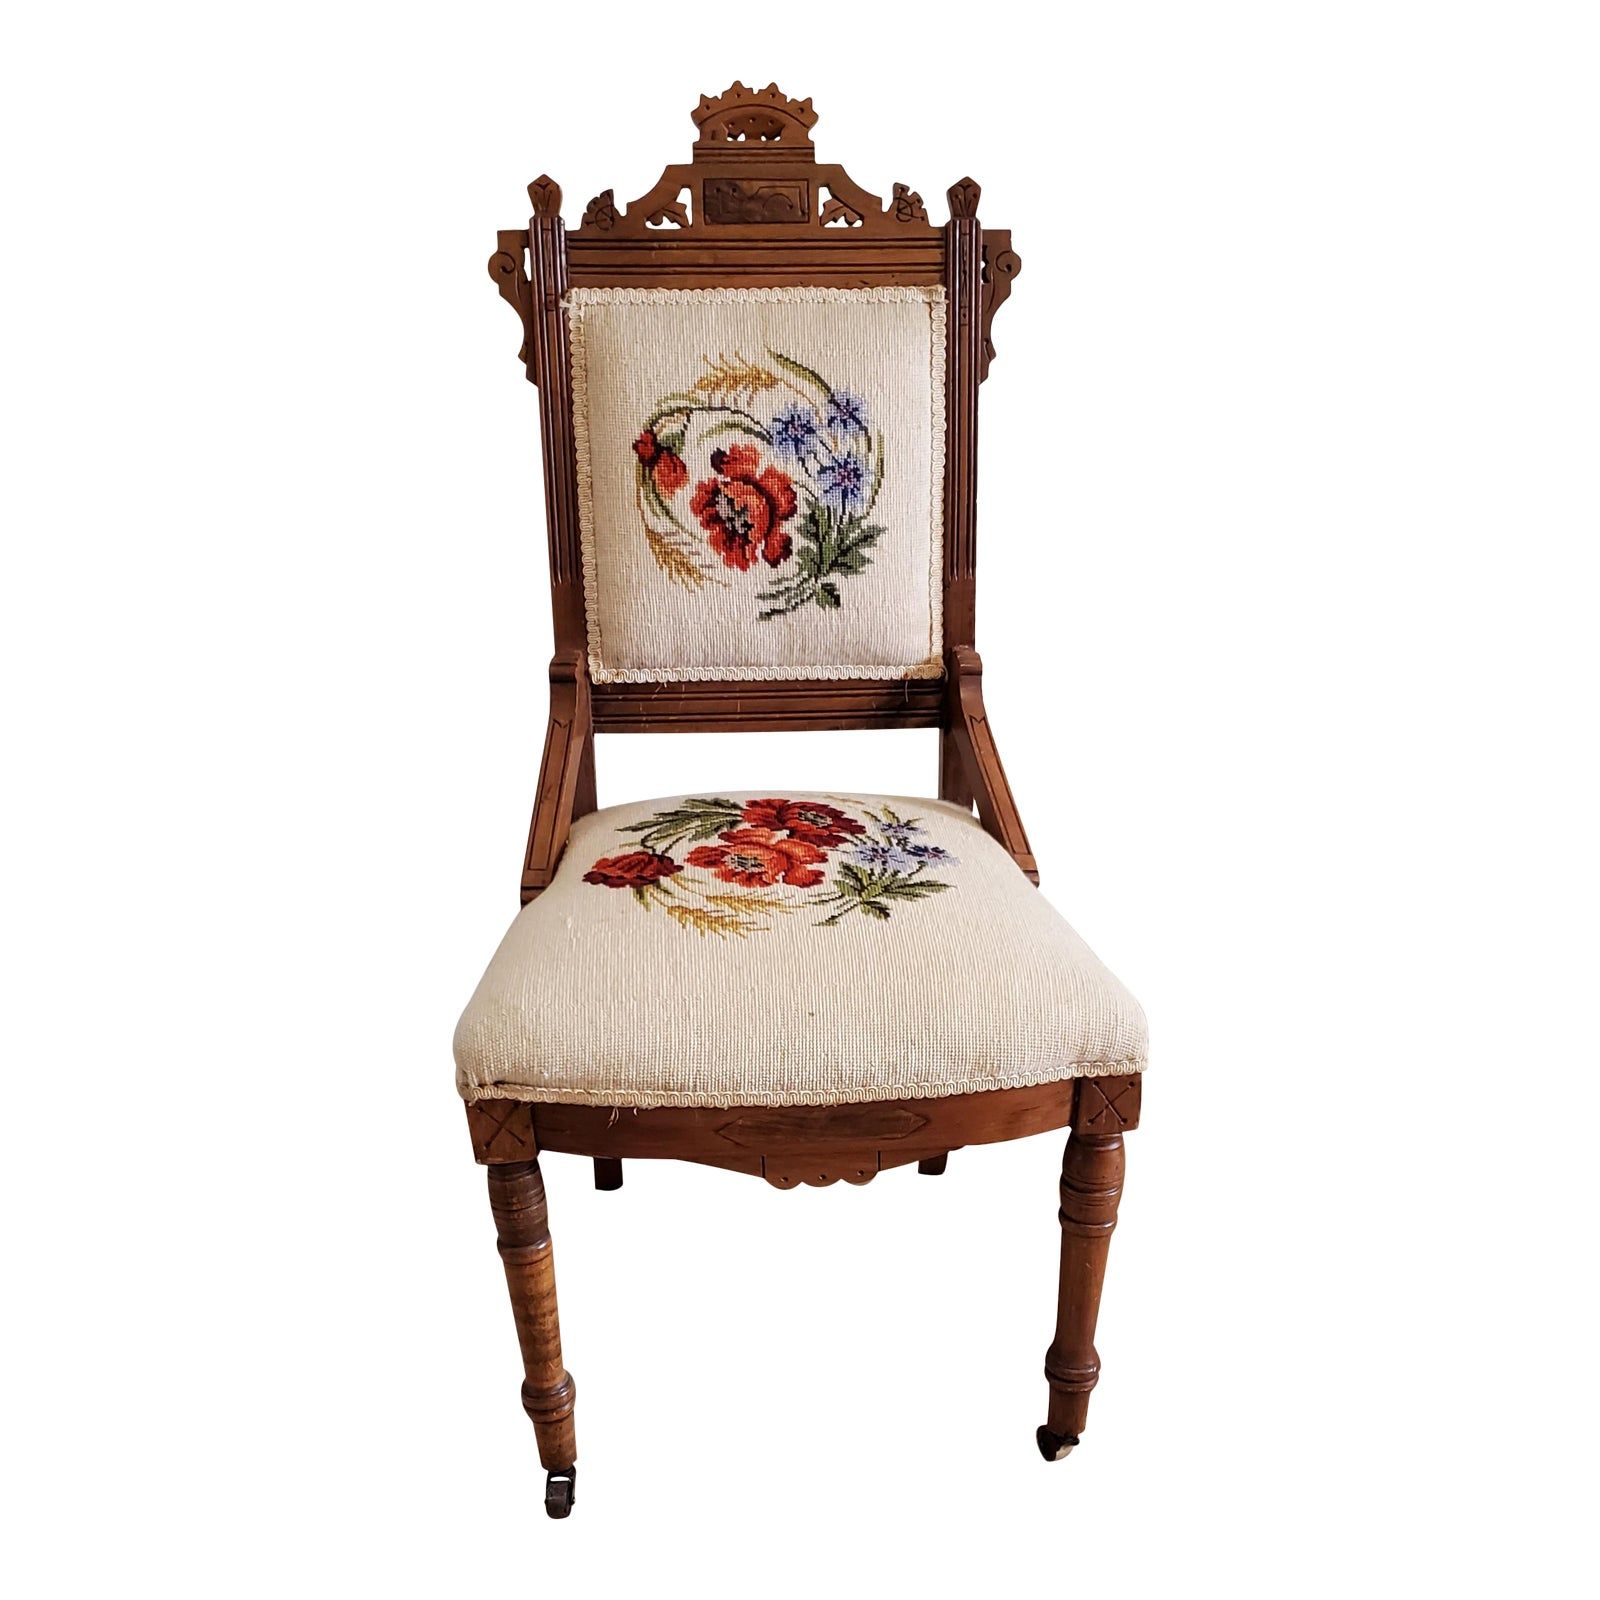 Victorian Walnut Parlor Chair